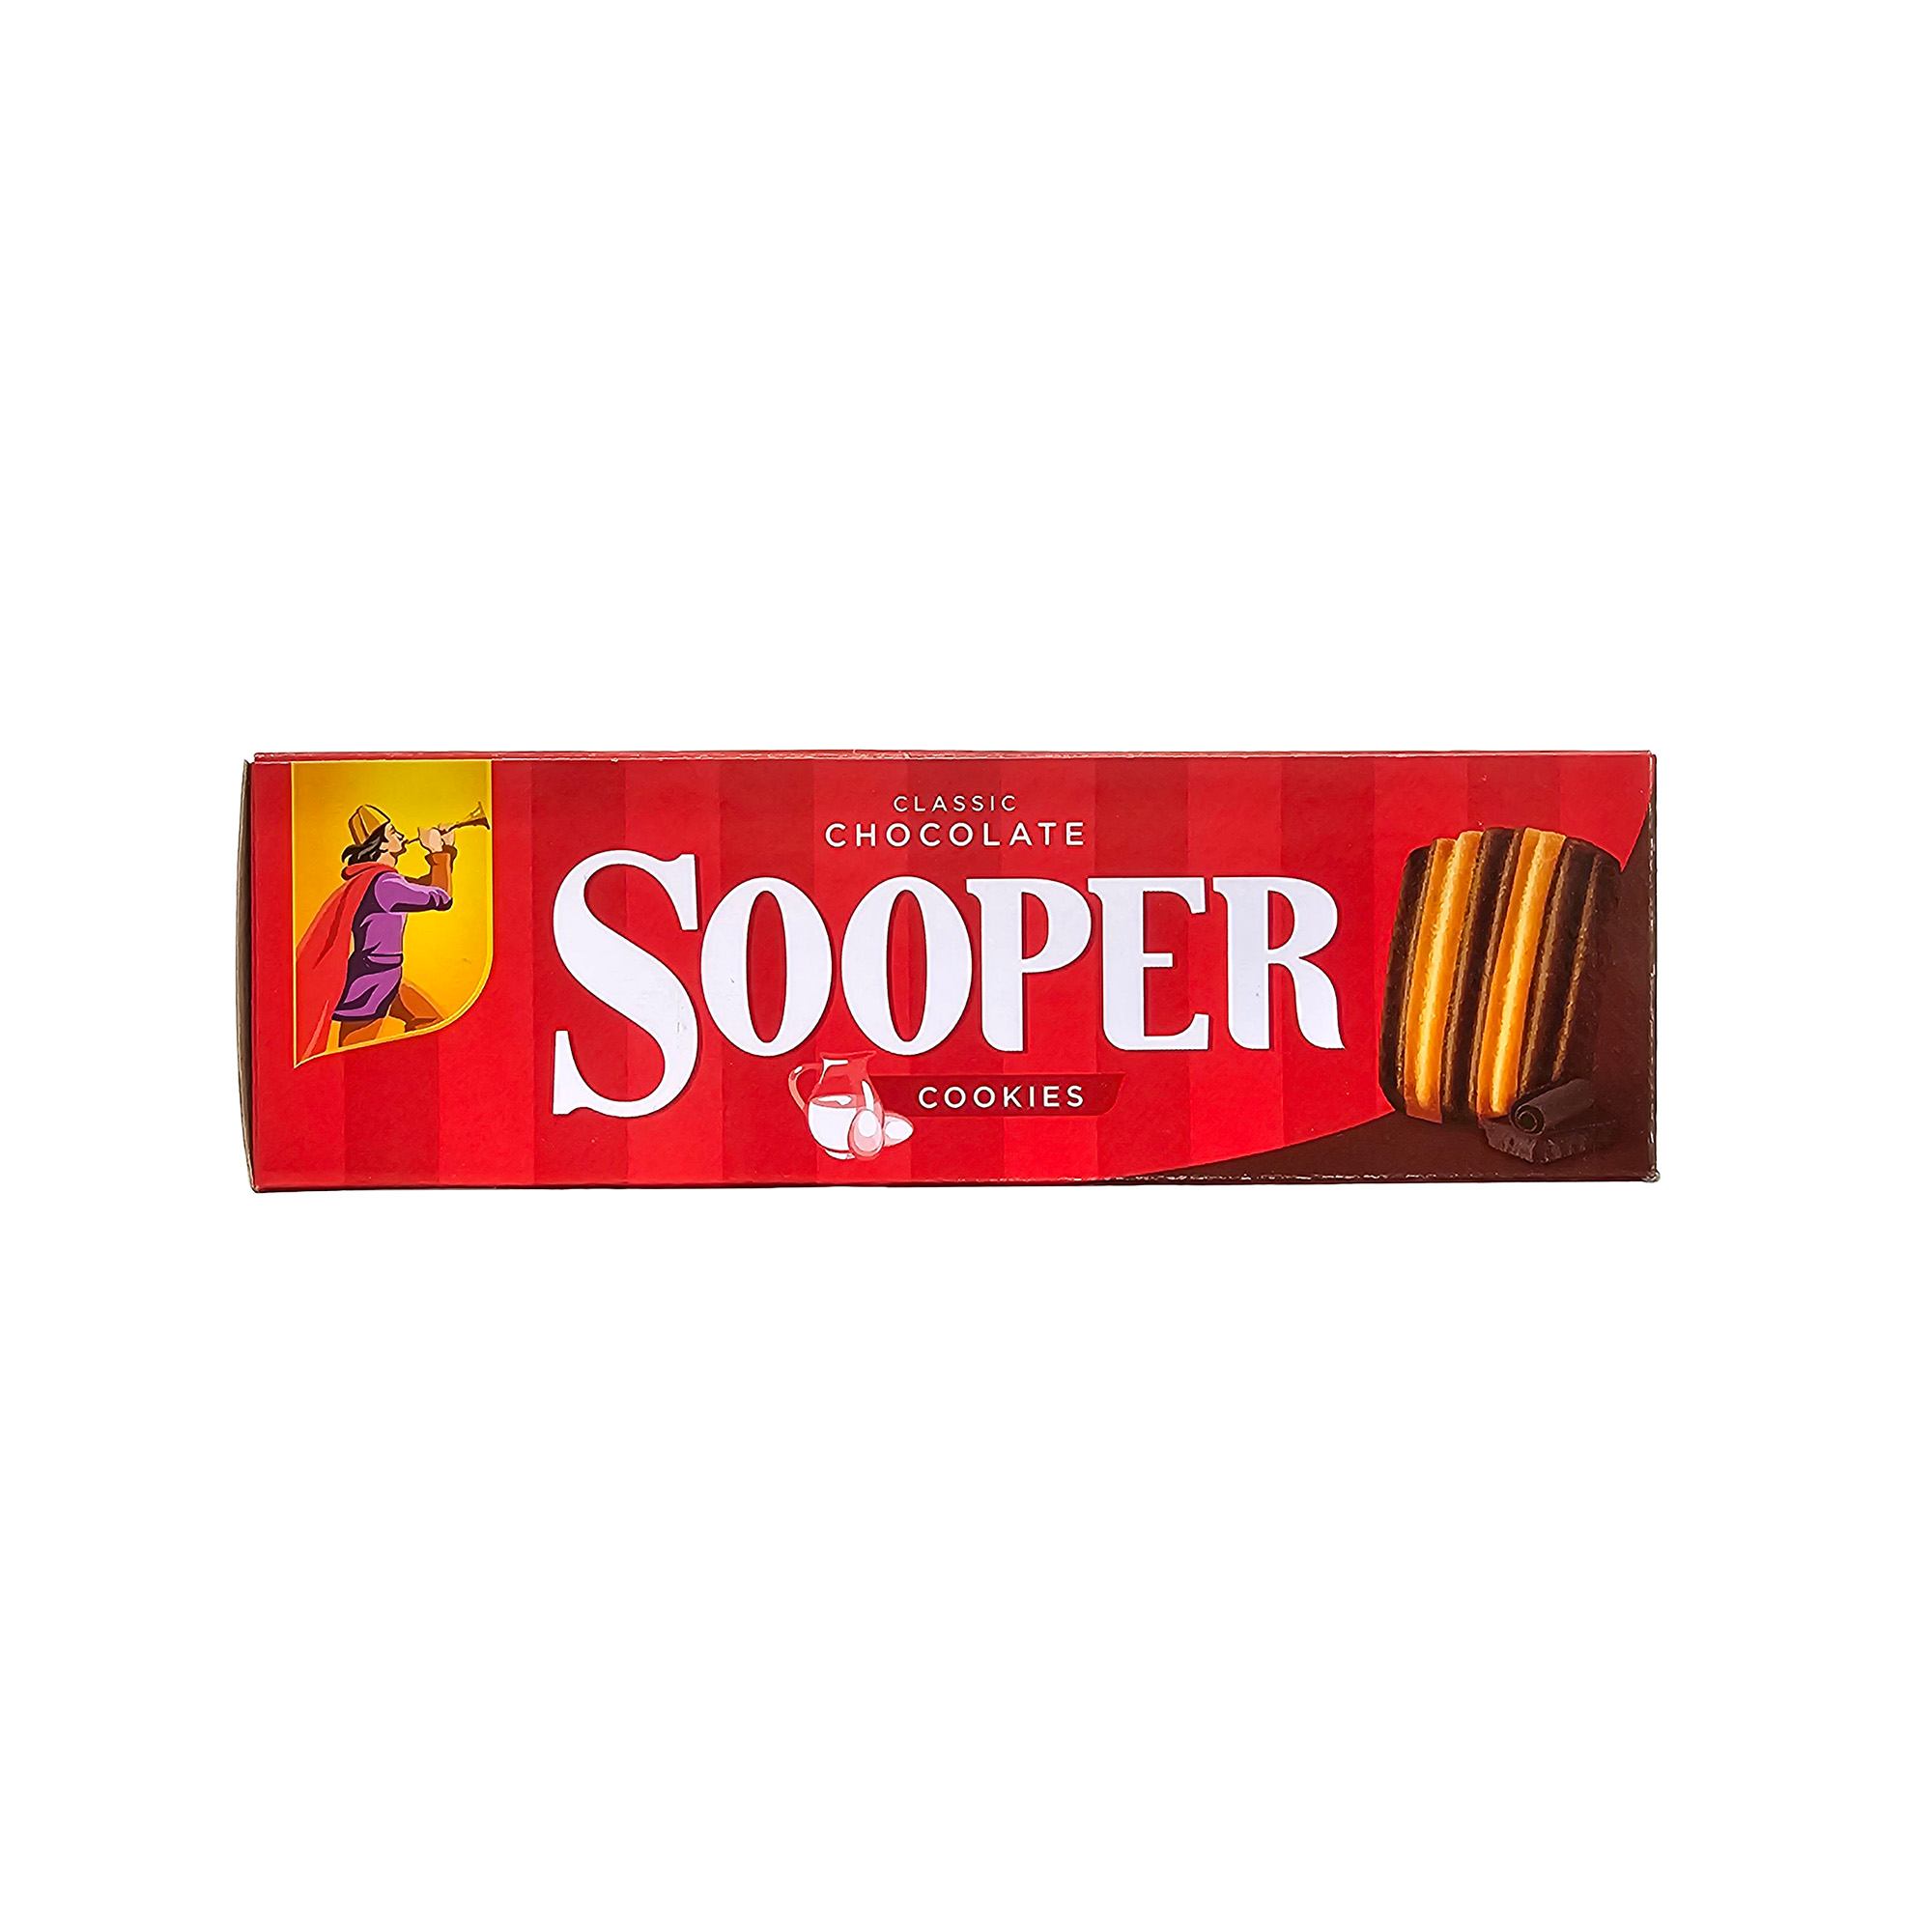 Classic Chocolate Sooper Cookies